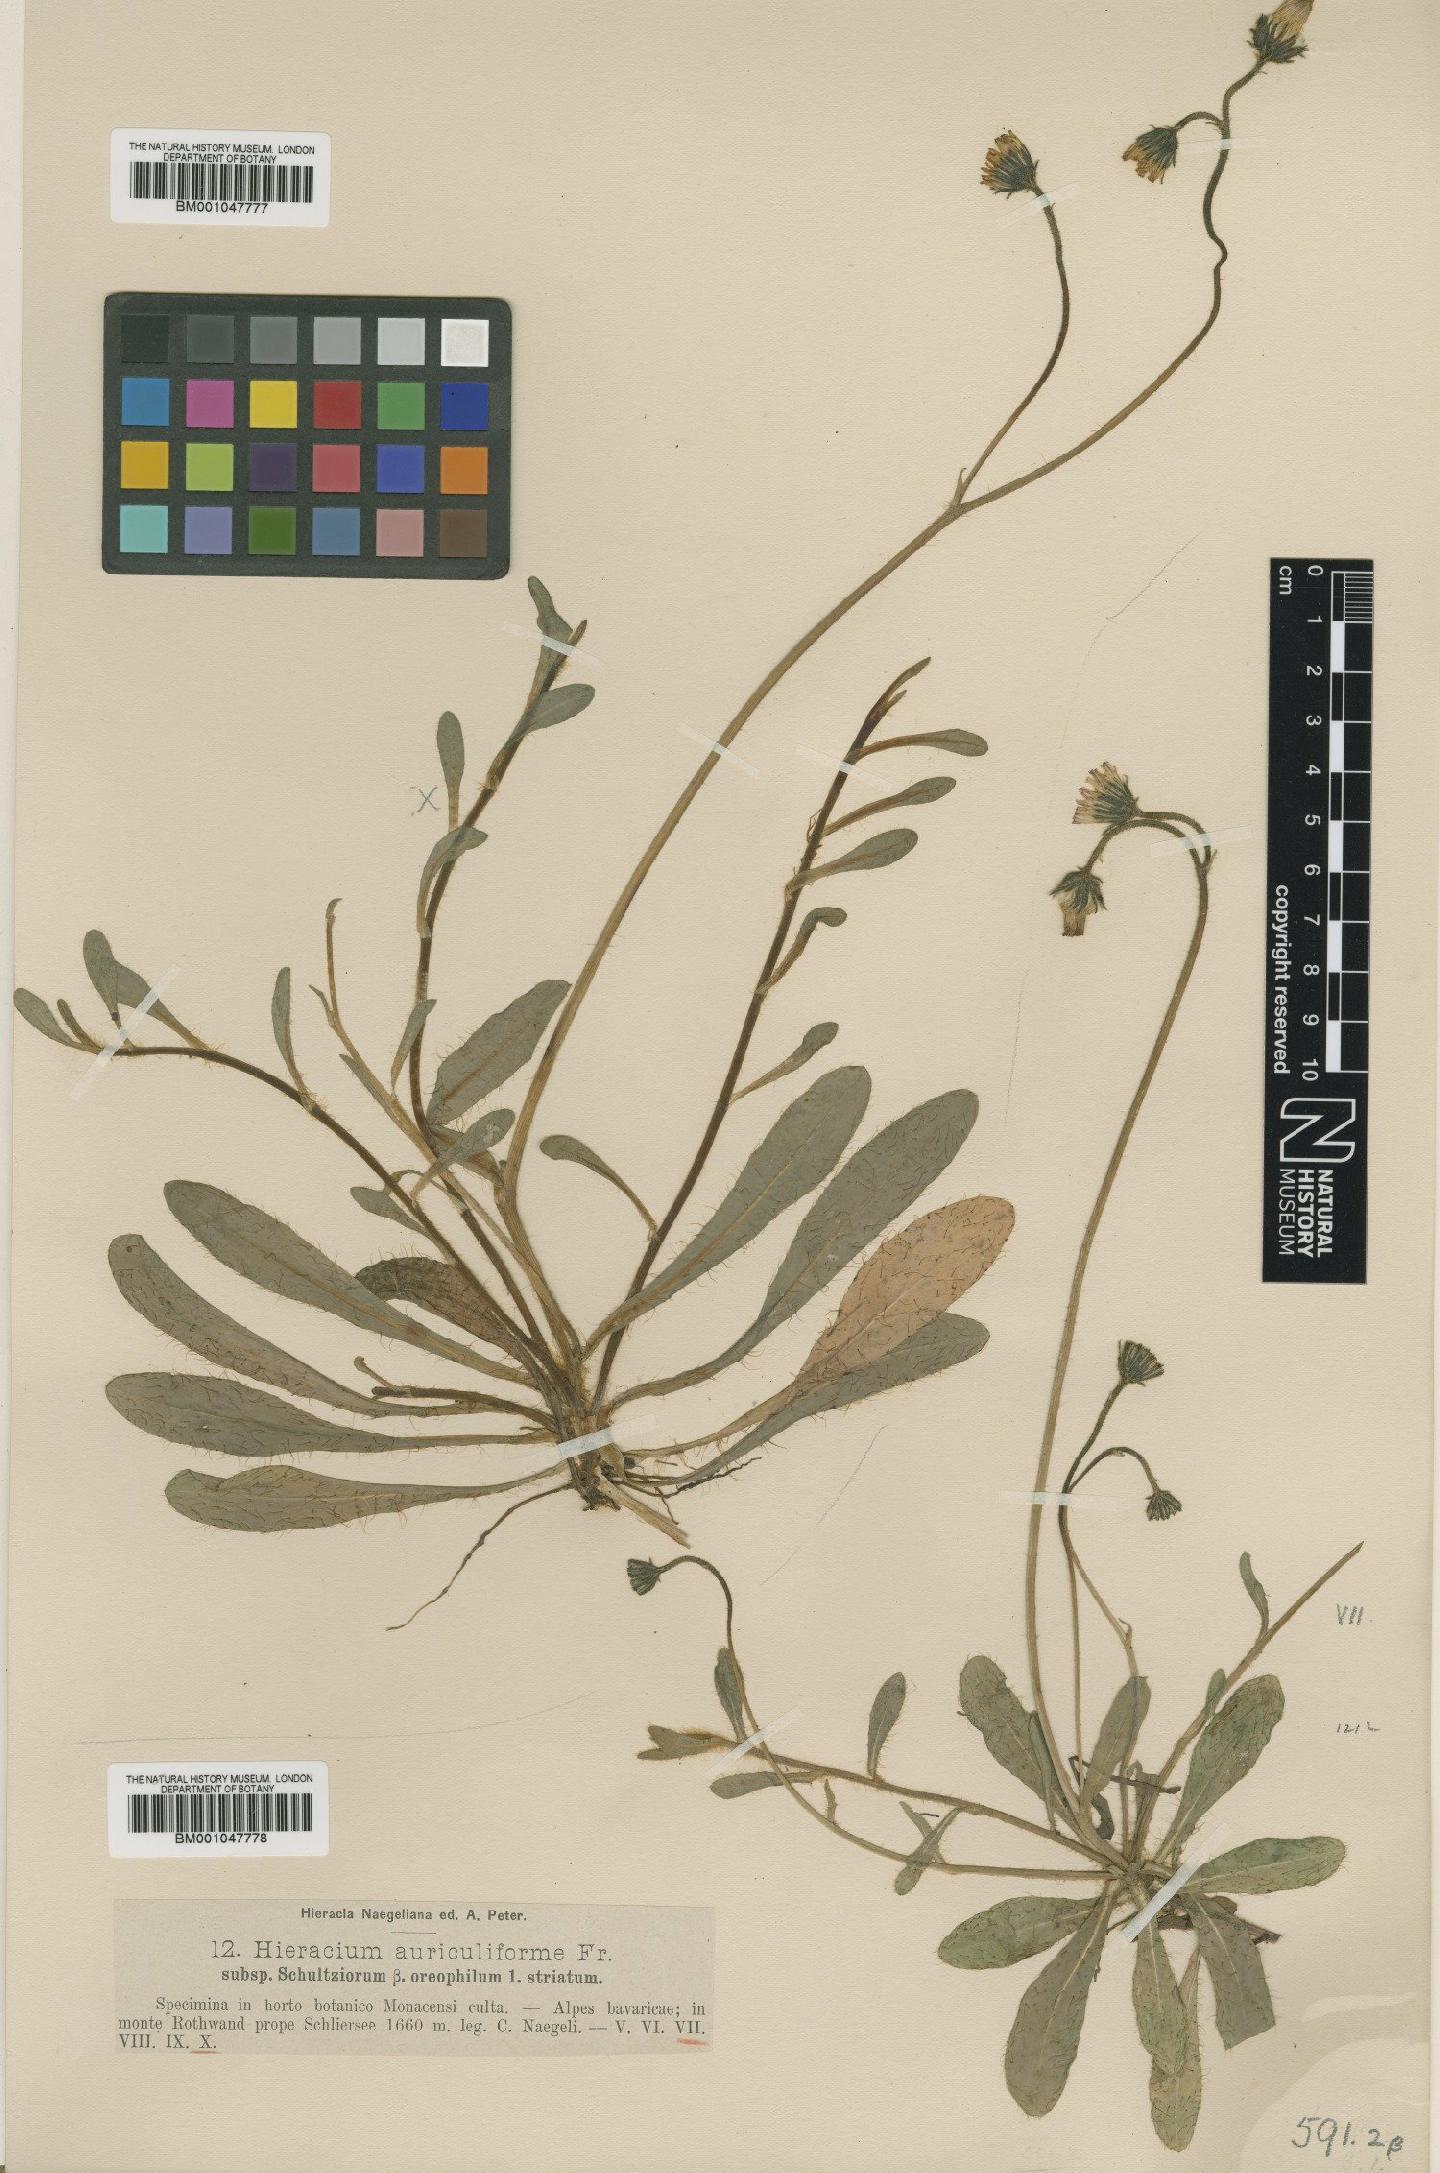 To NHMUK collection (Hieracium schultesii subsp. schultziorum Nägeli & Peter; NHMUK:ecatalogue:2815629)